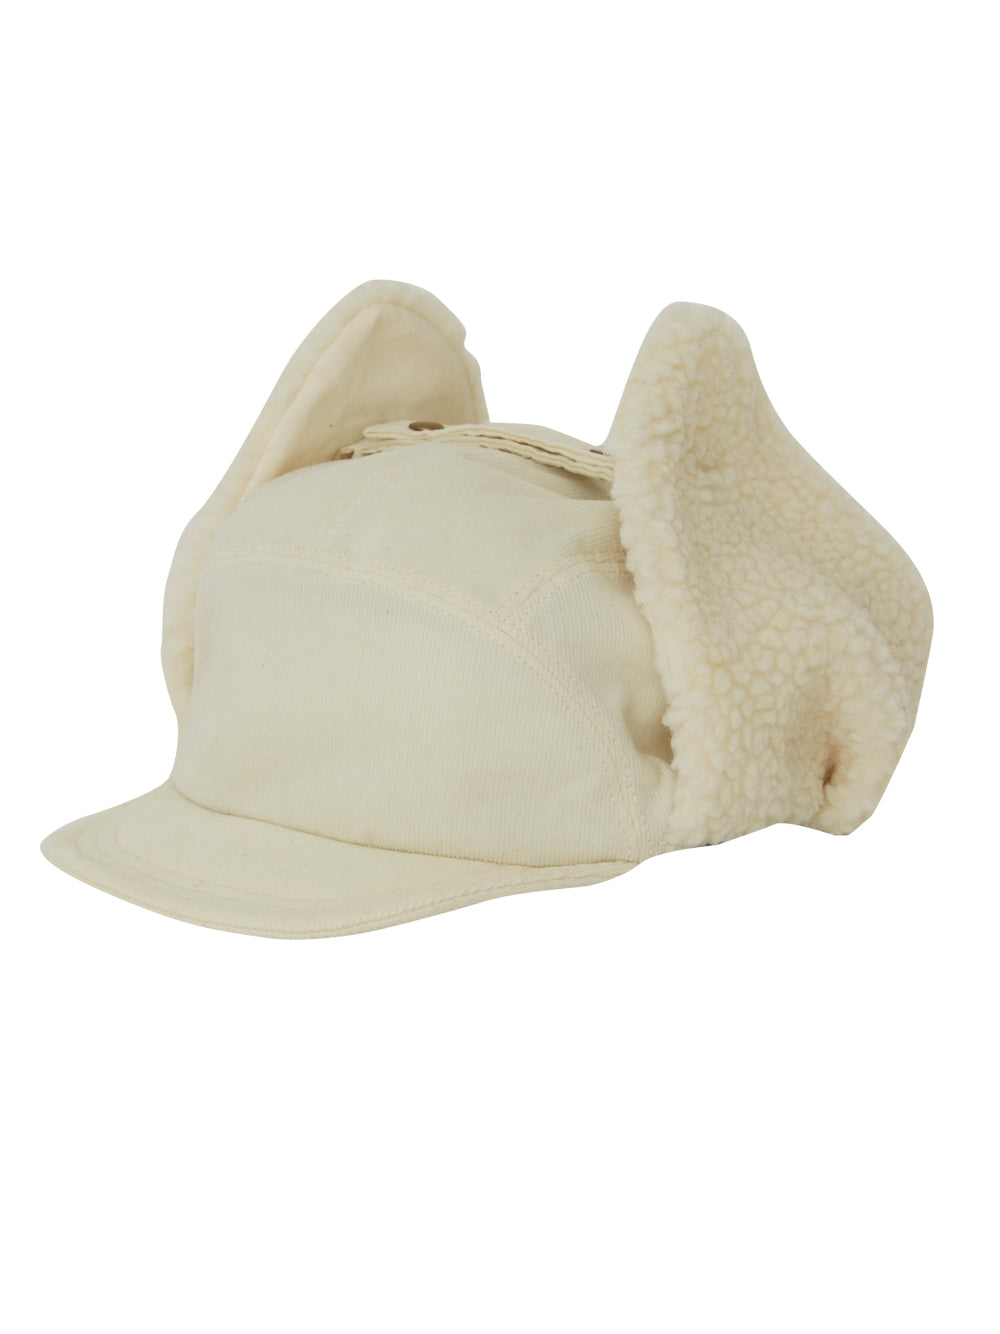 PREORDER: Lamb's Ear Ivory Cap